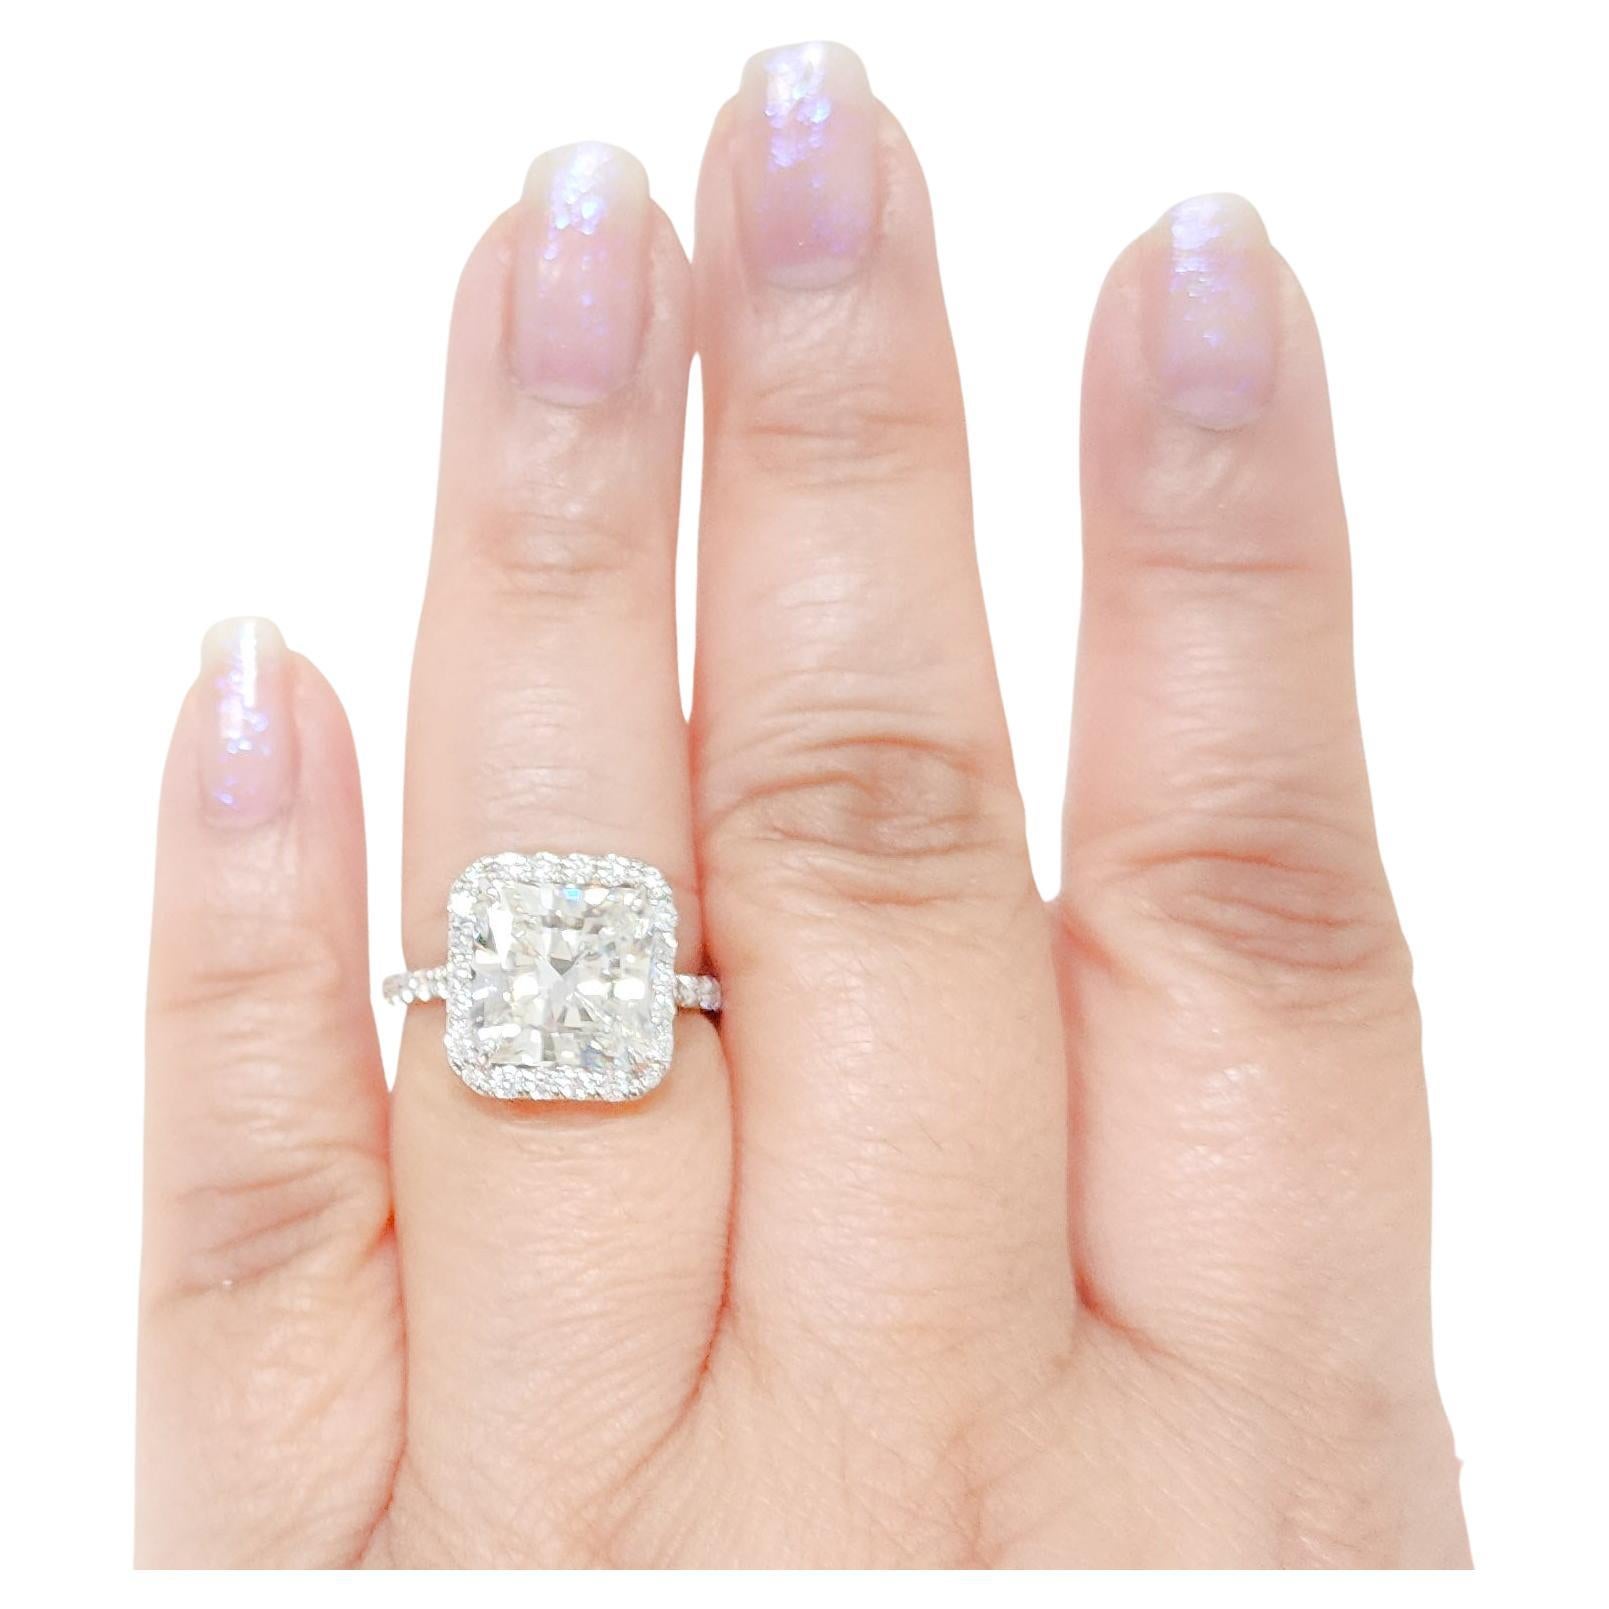 GIA 5.27ct. White Diamond Radiant Ring in 18k White Gold For Sale